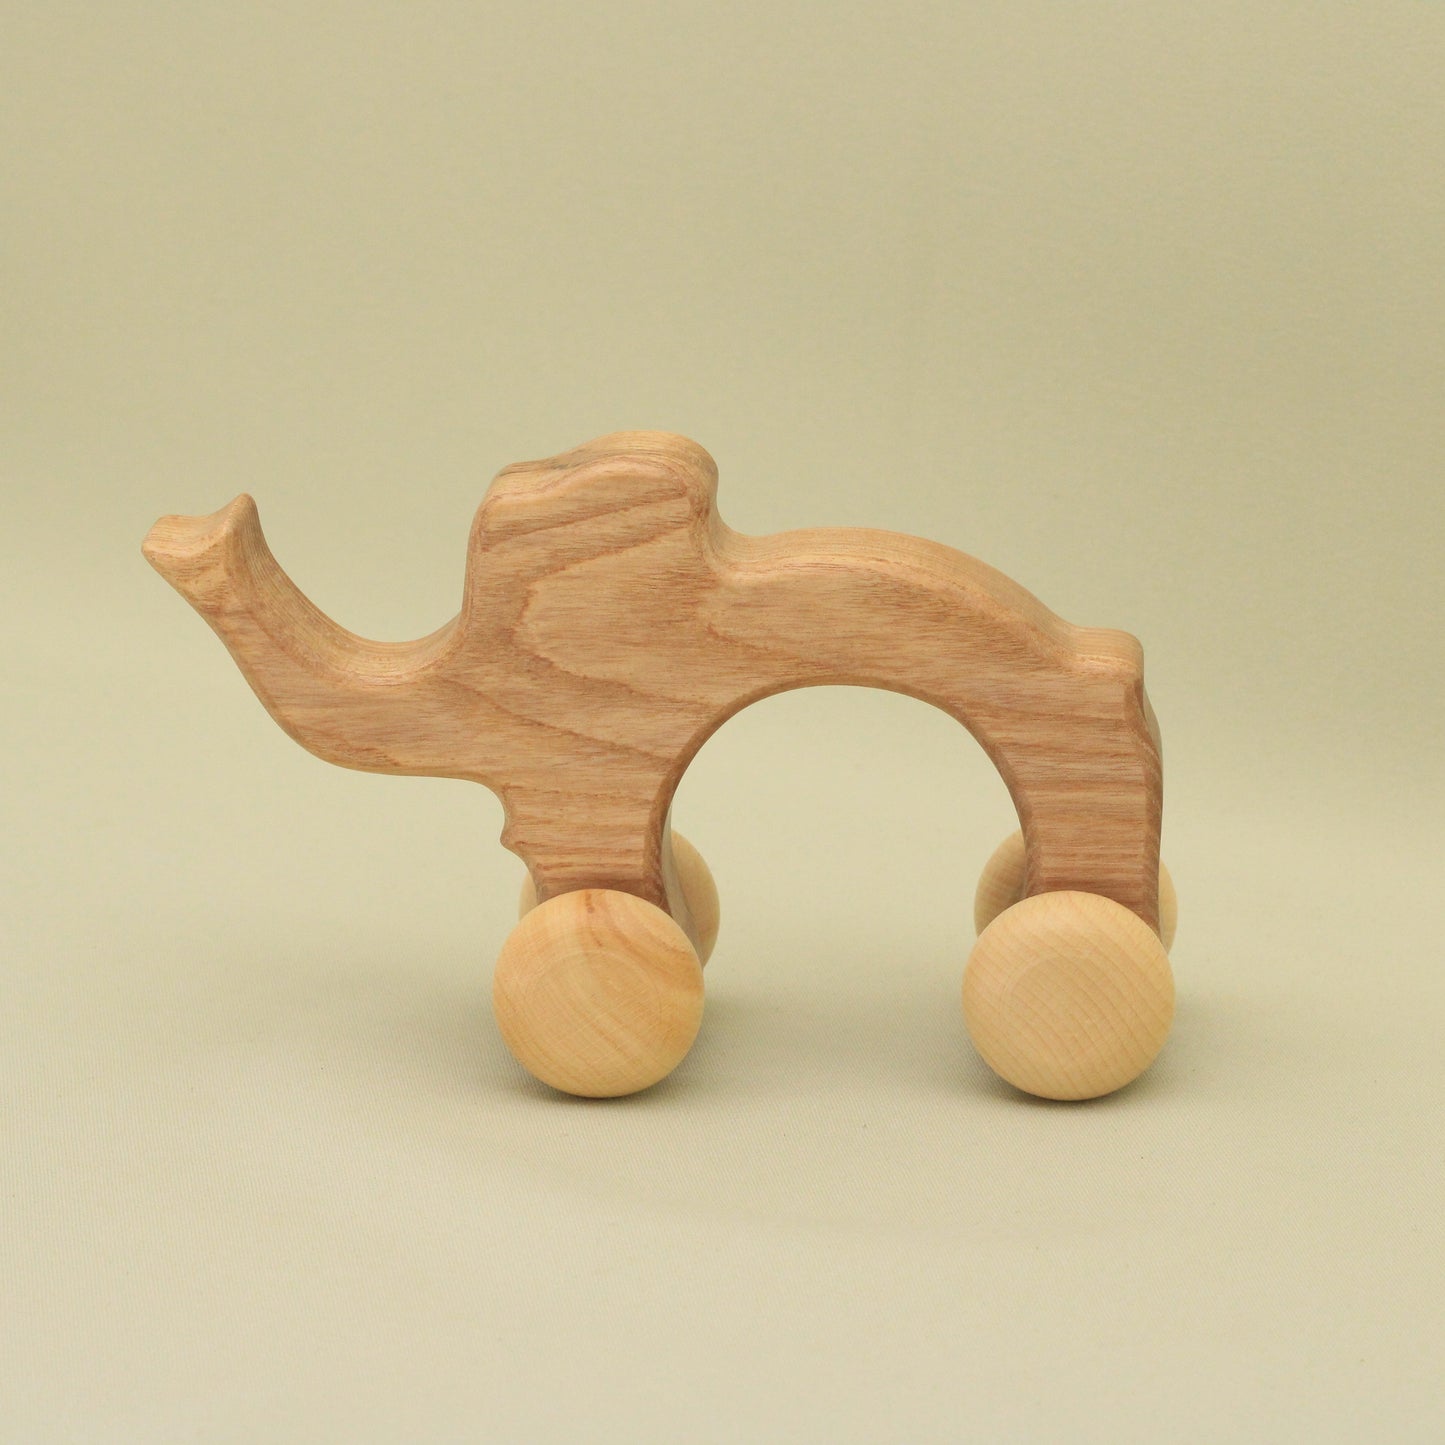 Lotes Toys Wooden Elephant WA04